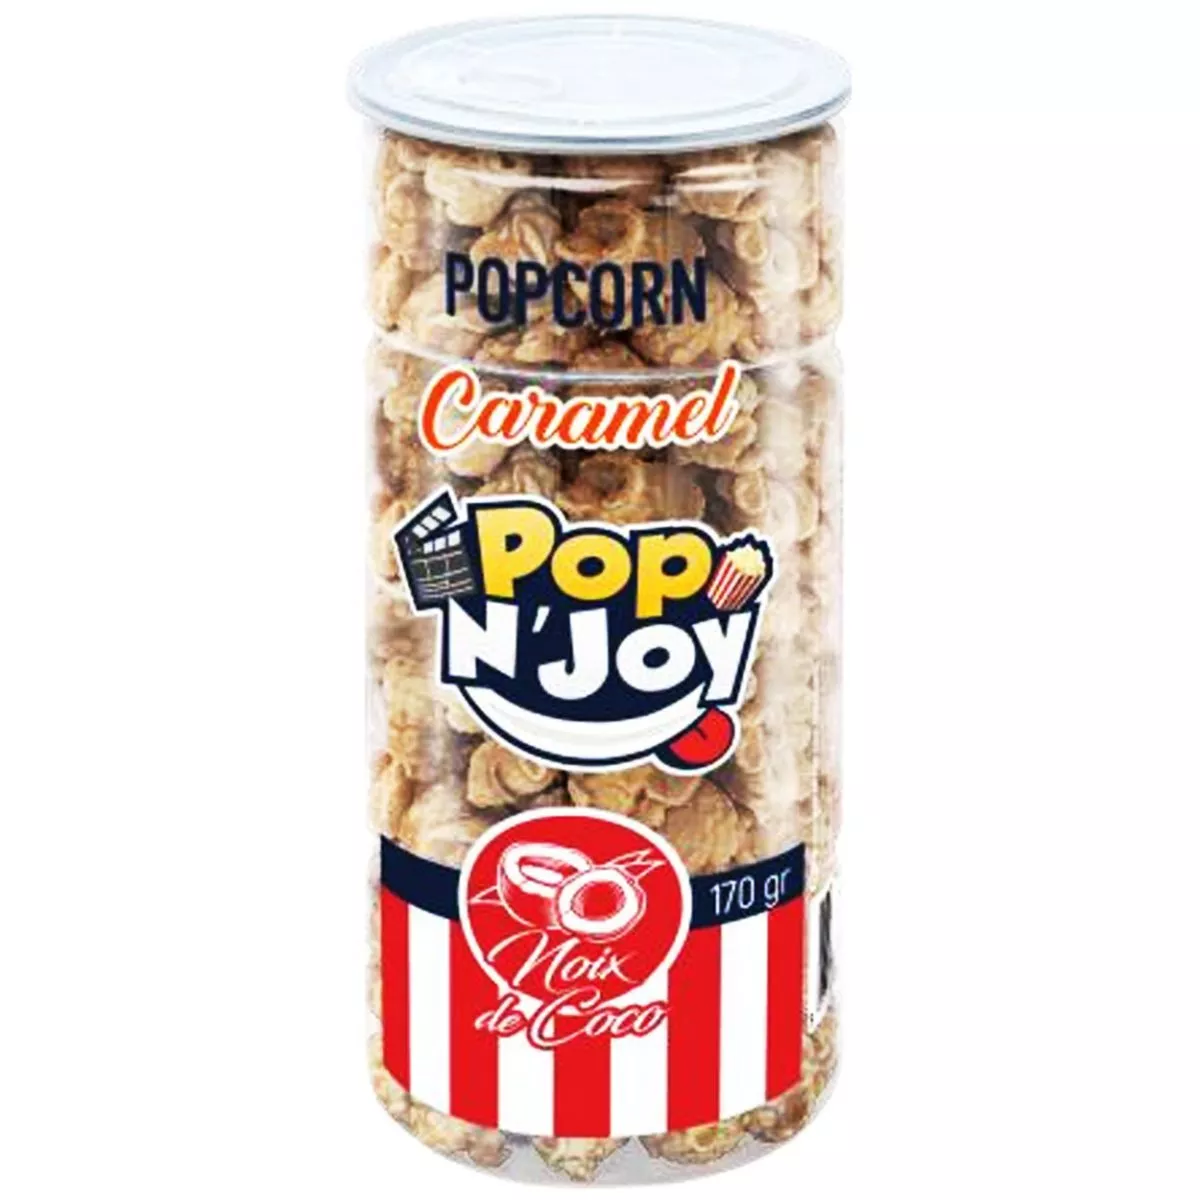 Popcorn Coconut Pop N' Joy (170g) 1